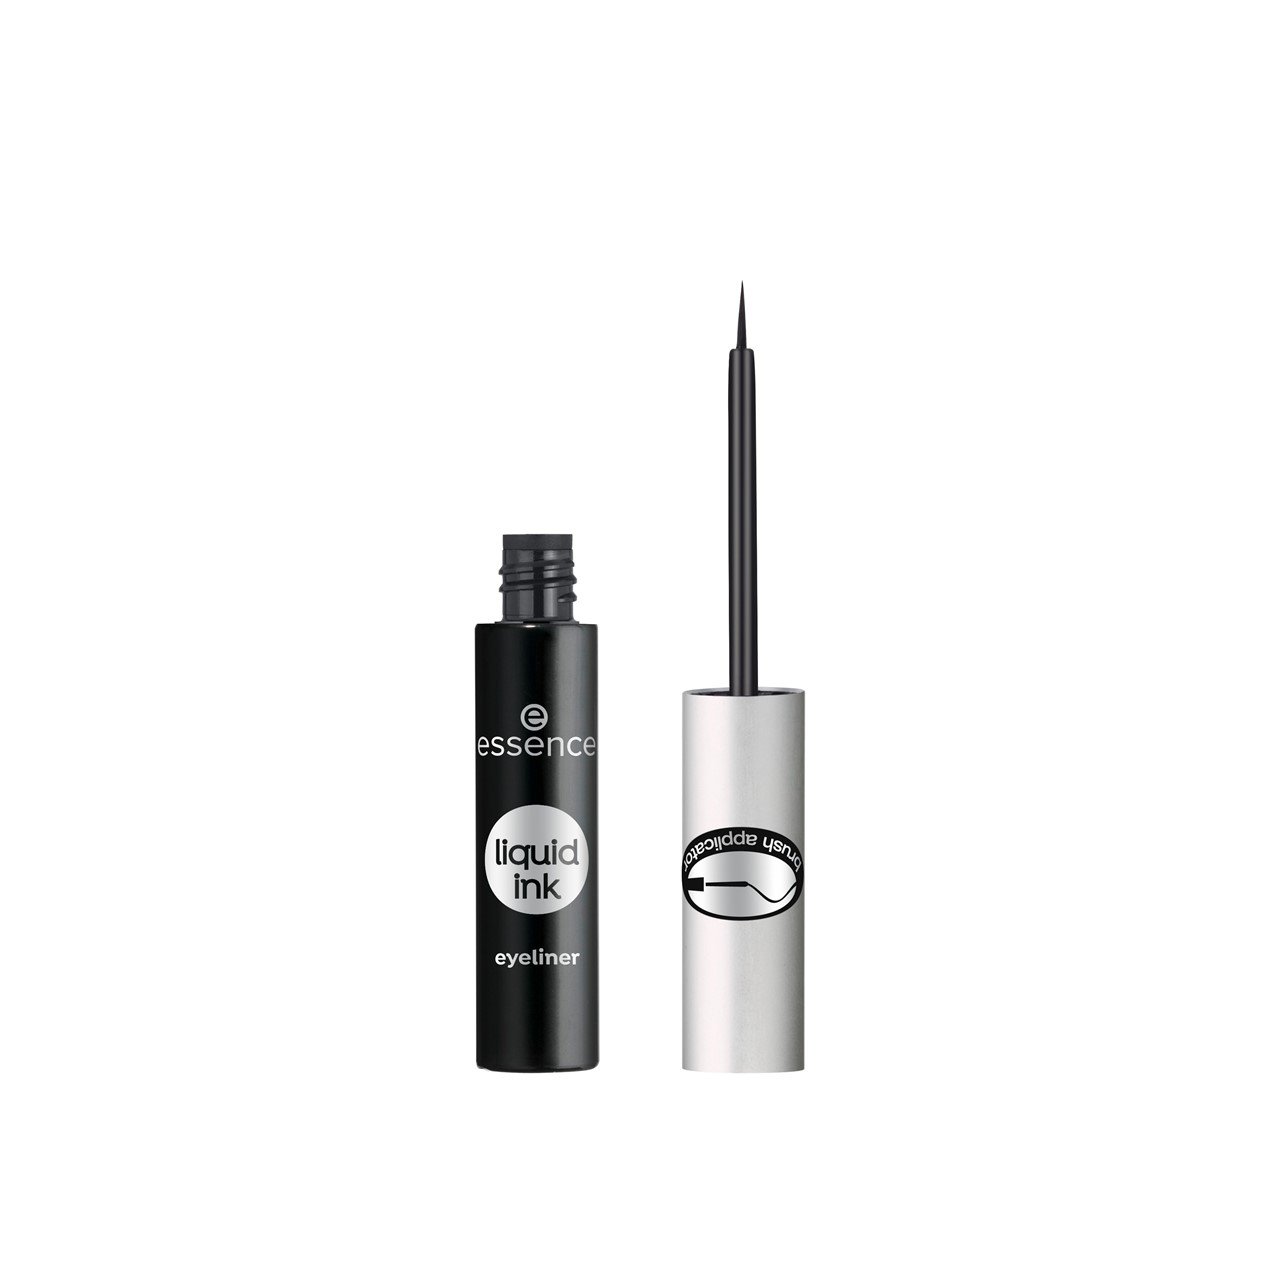 essence Liquid Ink Eyeliner 3ml (0.10fl oz)